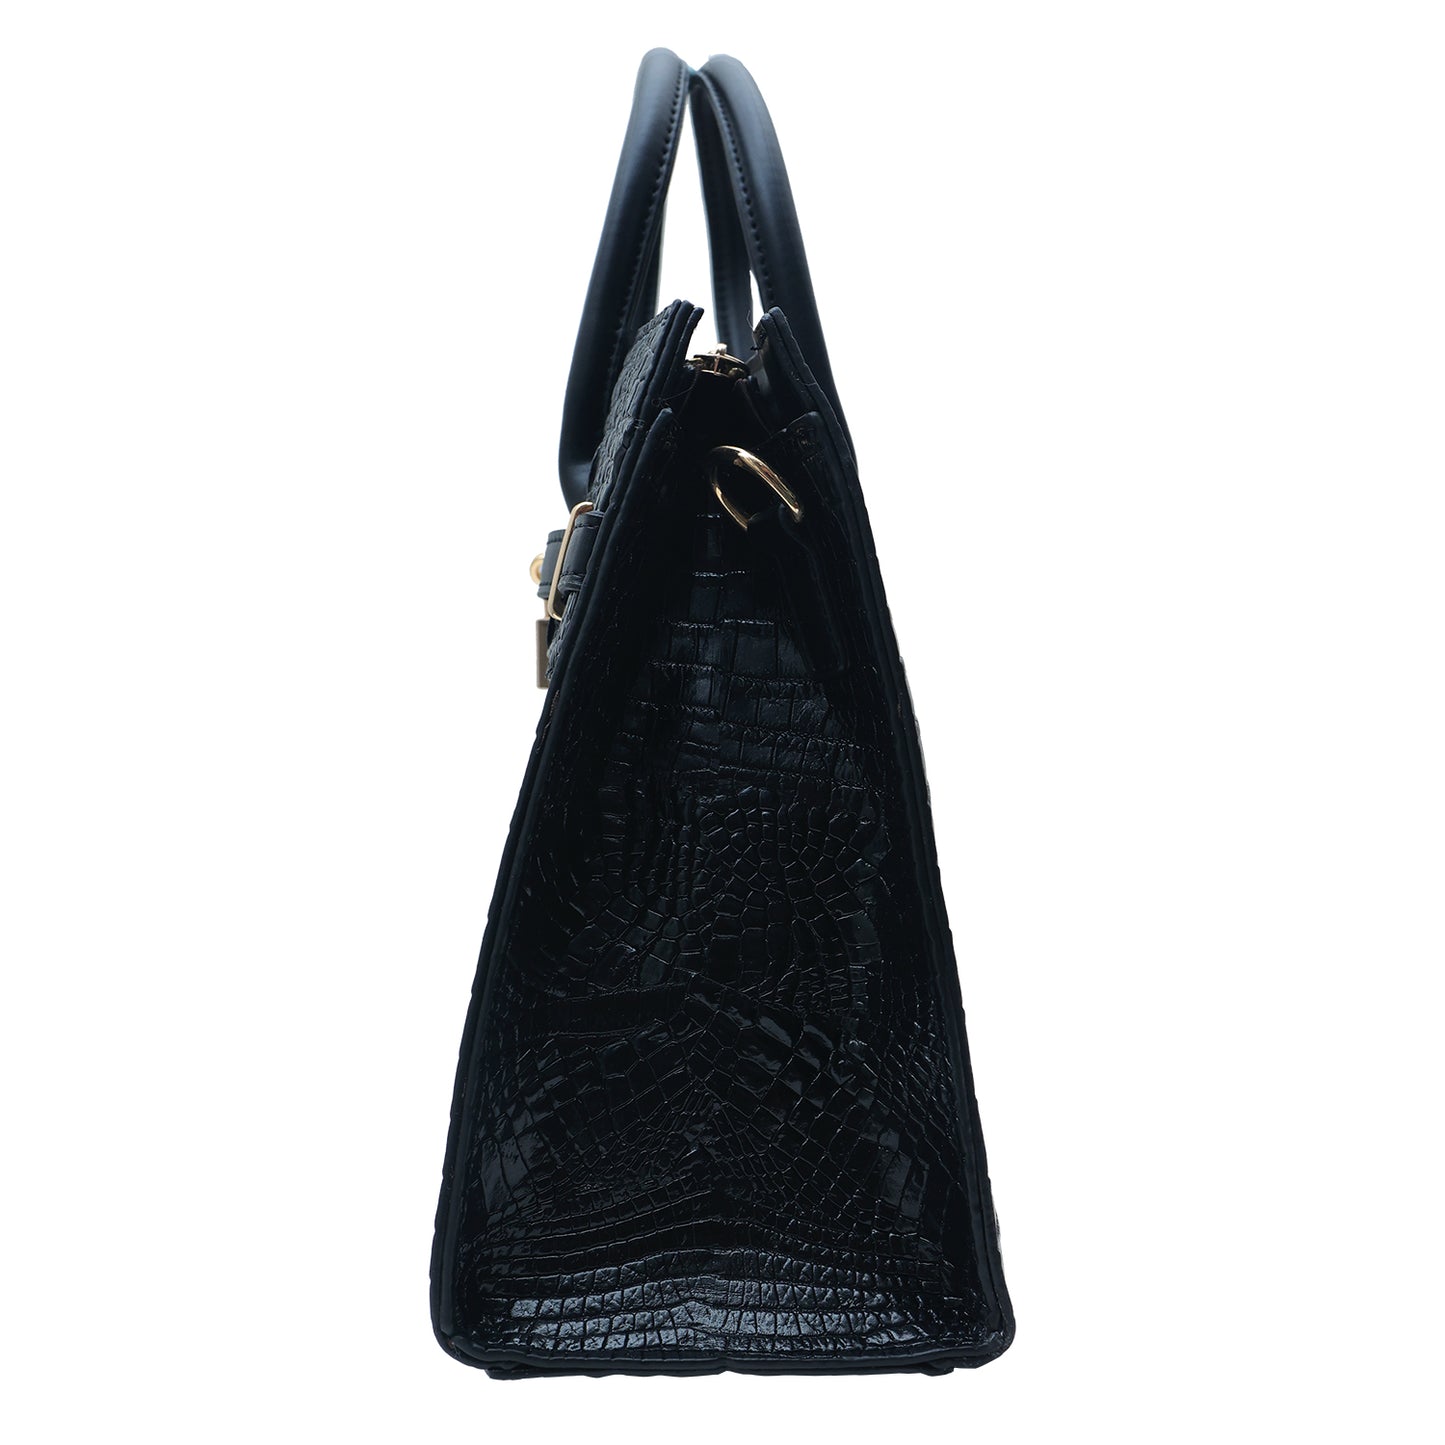 Angeline's Handbag with Lock Design